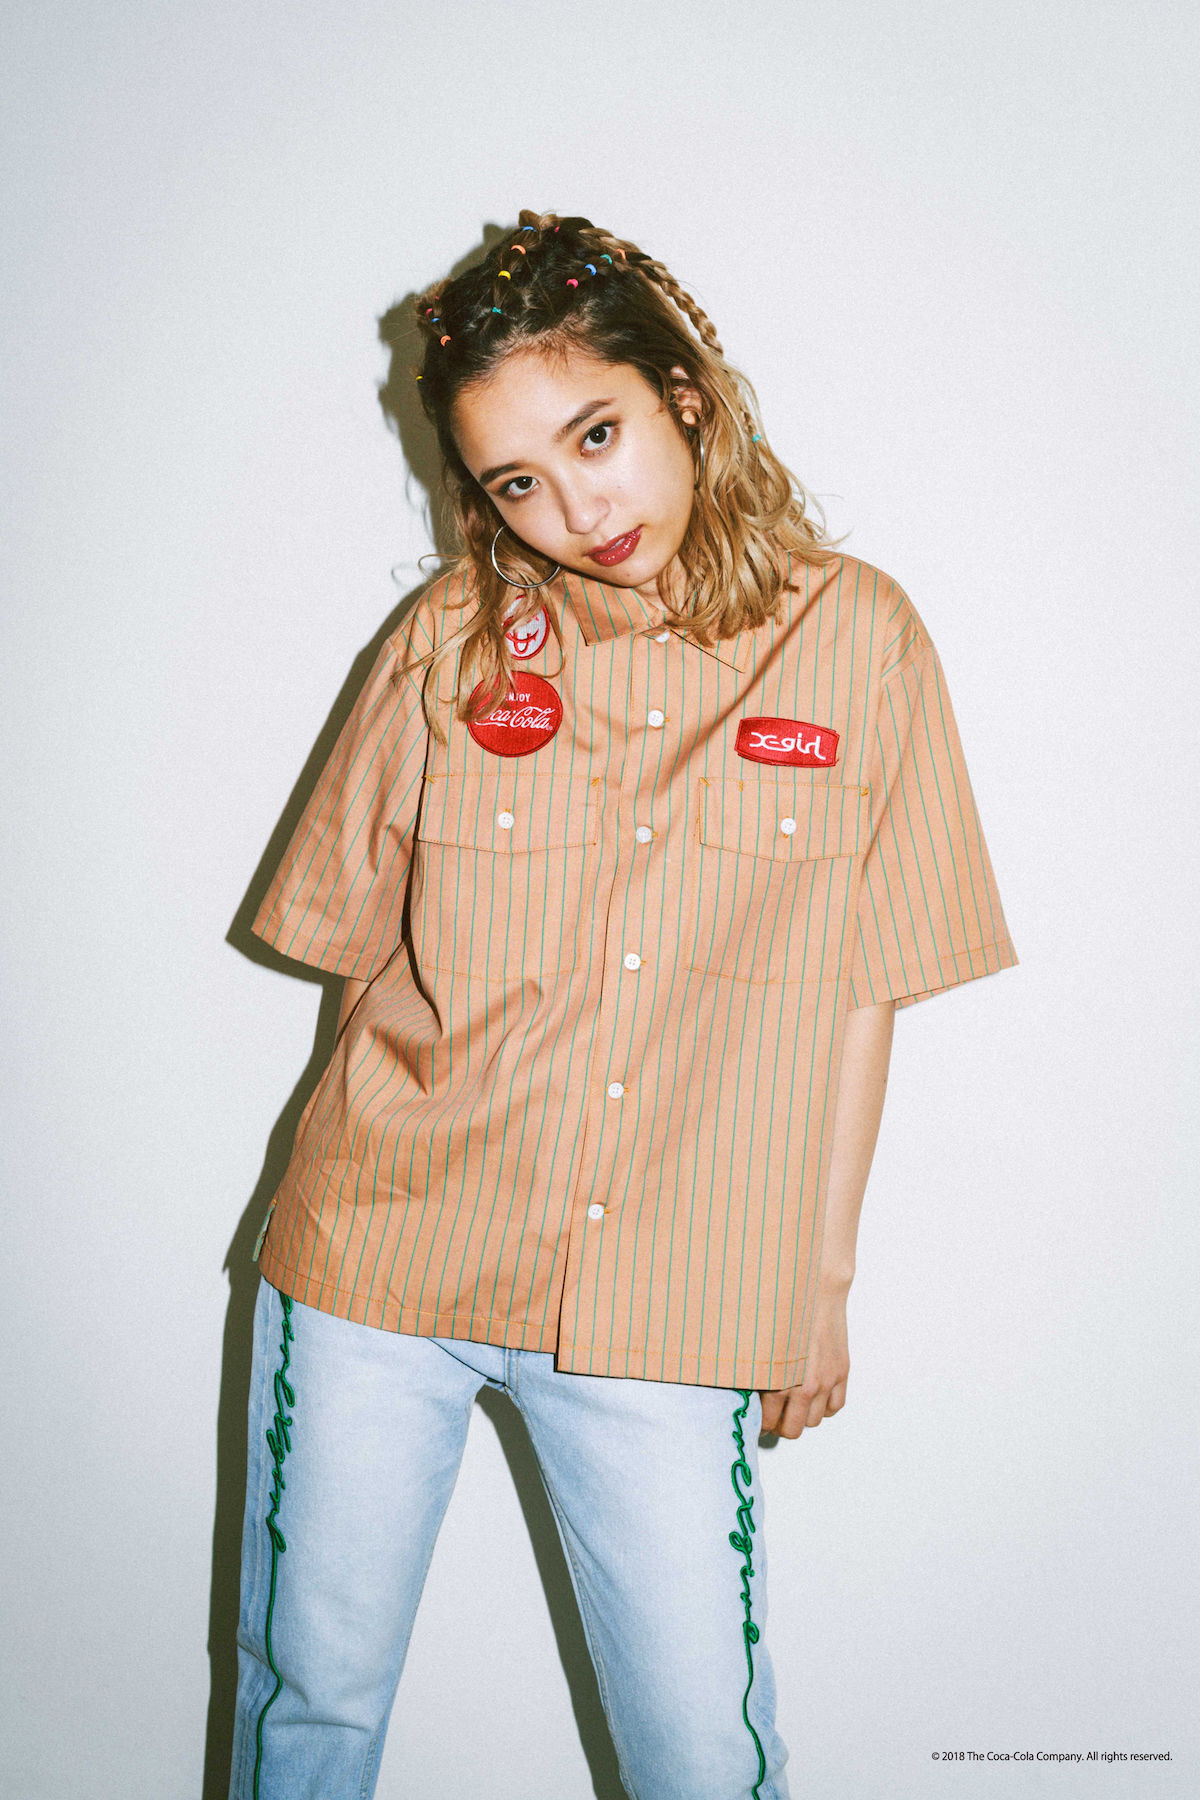 X-girl×コカ・コーラ！「コカ·コーラ」中国語ロゴを採用したオリエンタルなTシャツなどが登場！ fashion180226_xgirl-coke_7-1200x1800